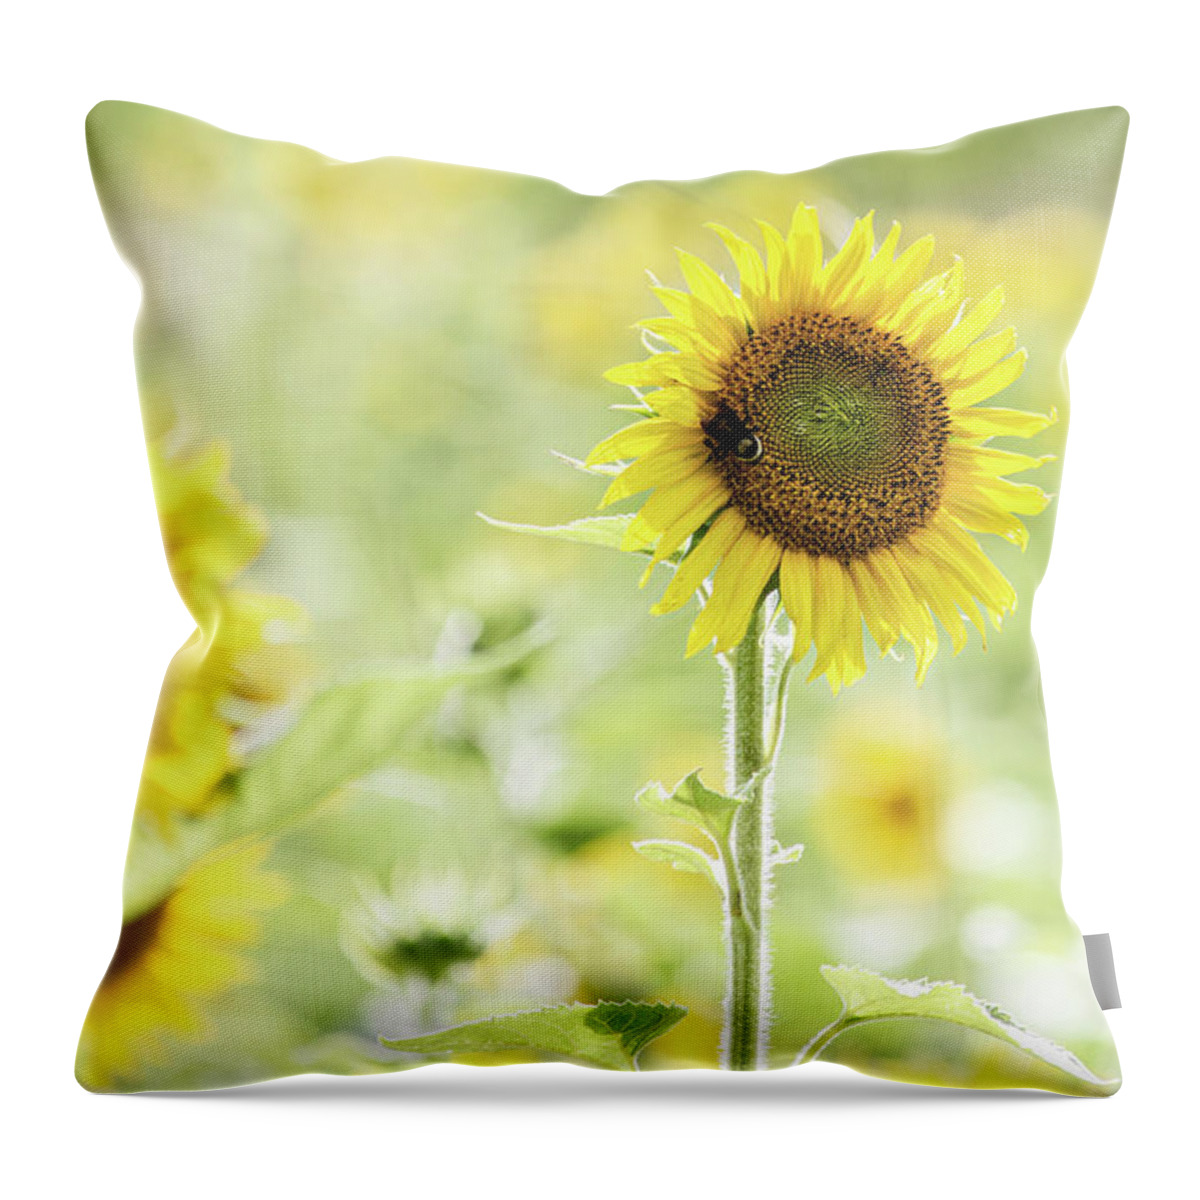 Farm Throw Pillow featuring the photograph Sunflower Soft Light by Randy Bayne